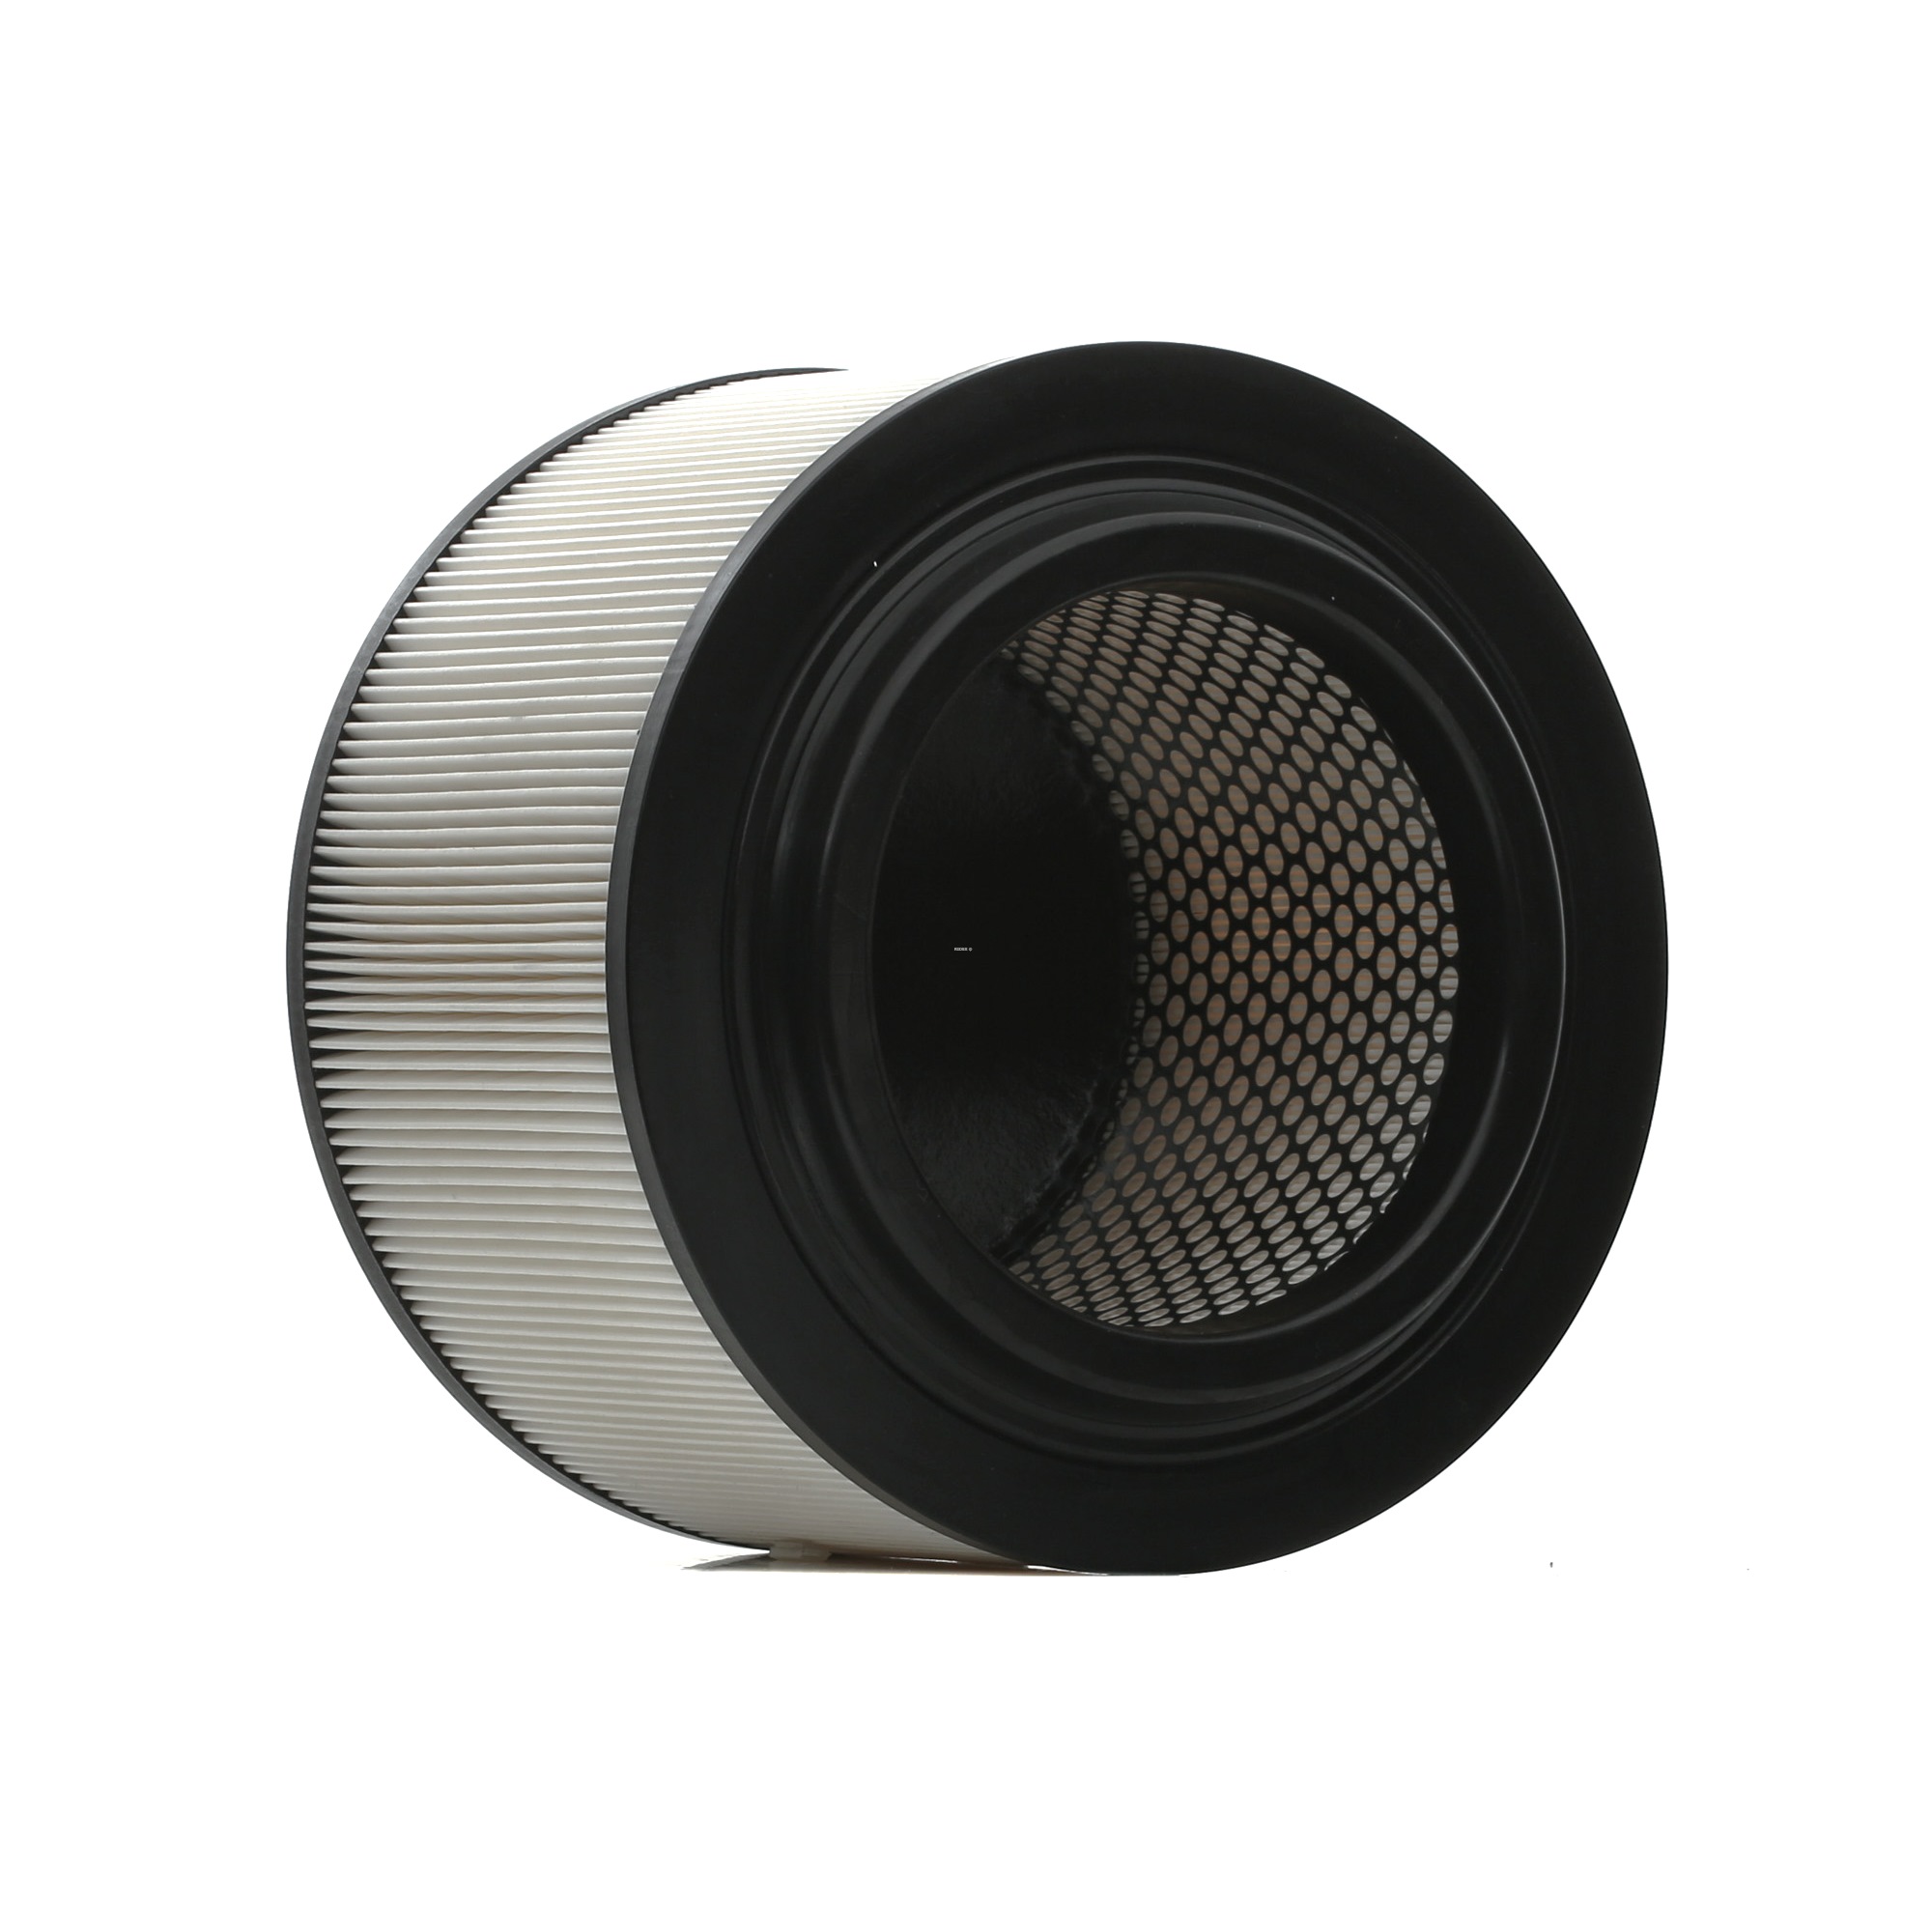 RIDEX 138mm, 222mm, Cylindrical, Air Recirculation Filter, Filter Insert Height: 138mm Engine air filter 8A0589 buy